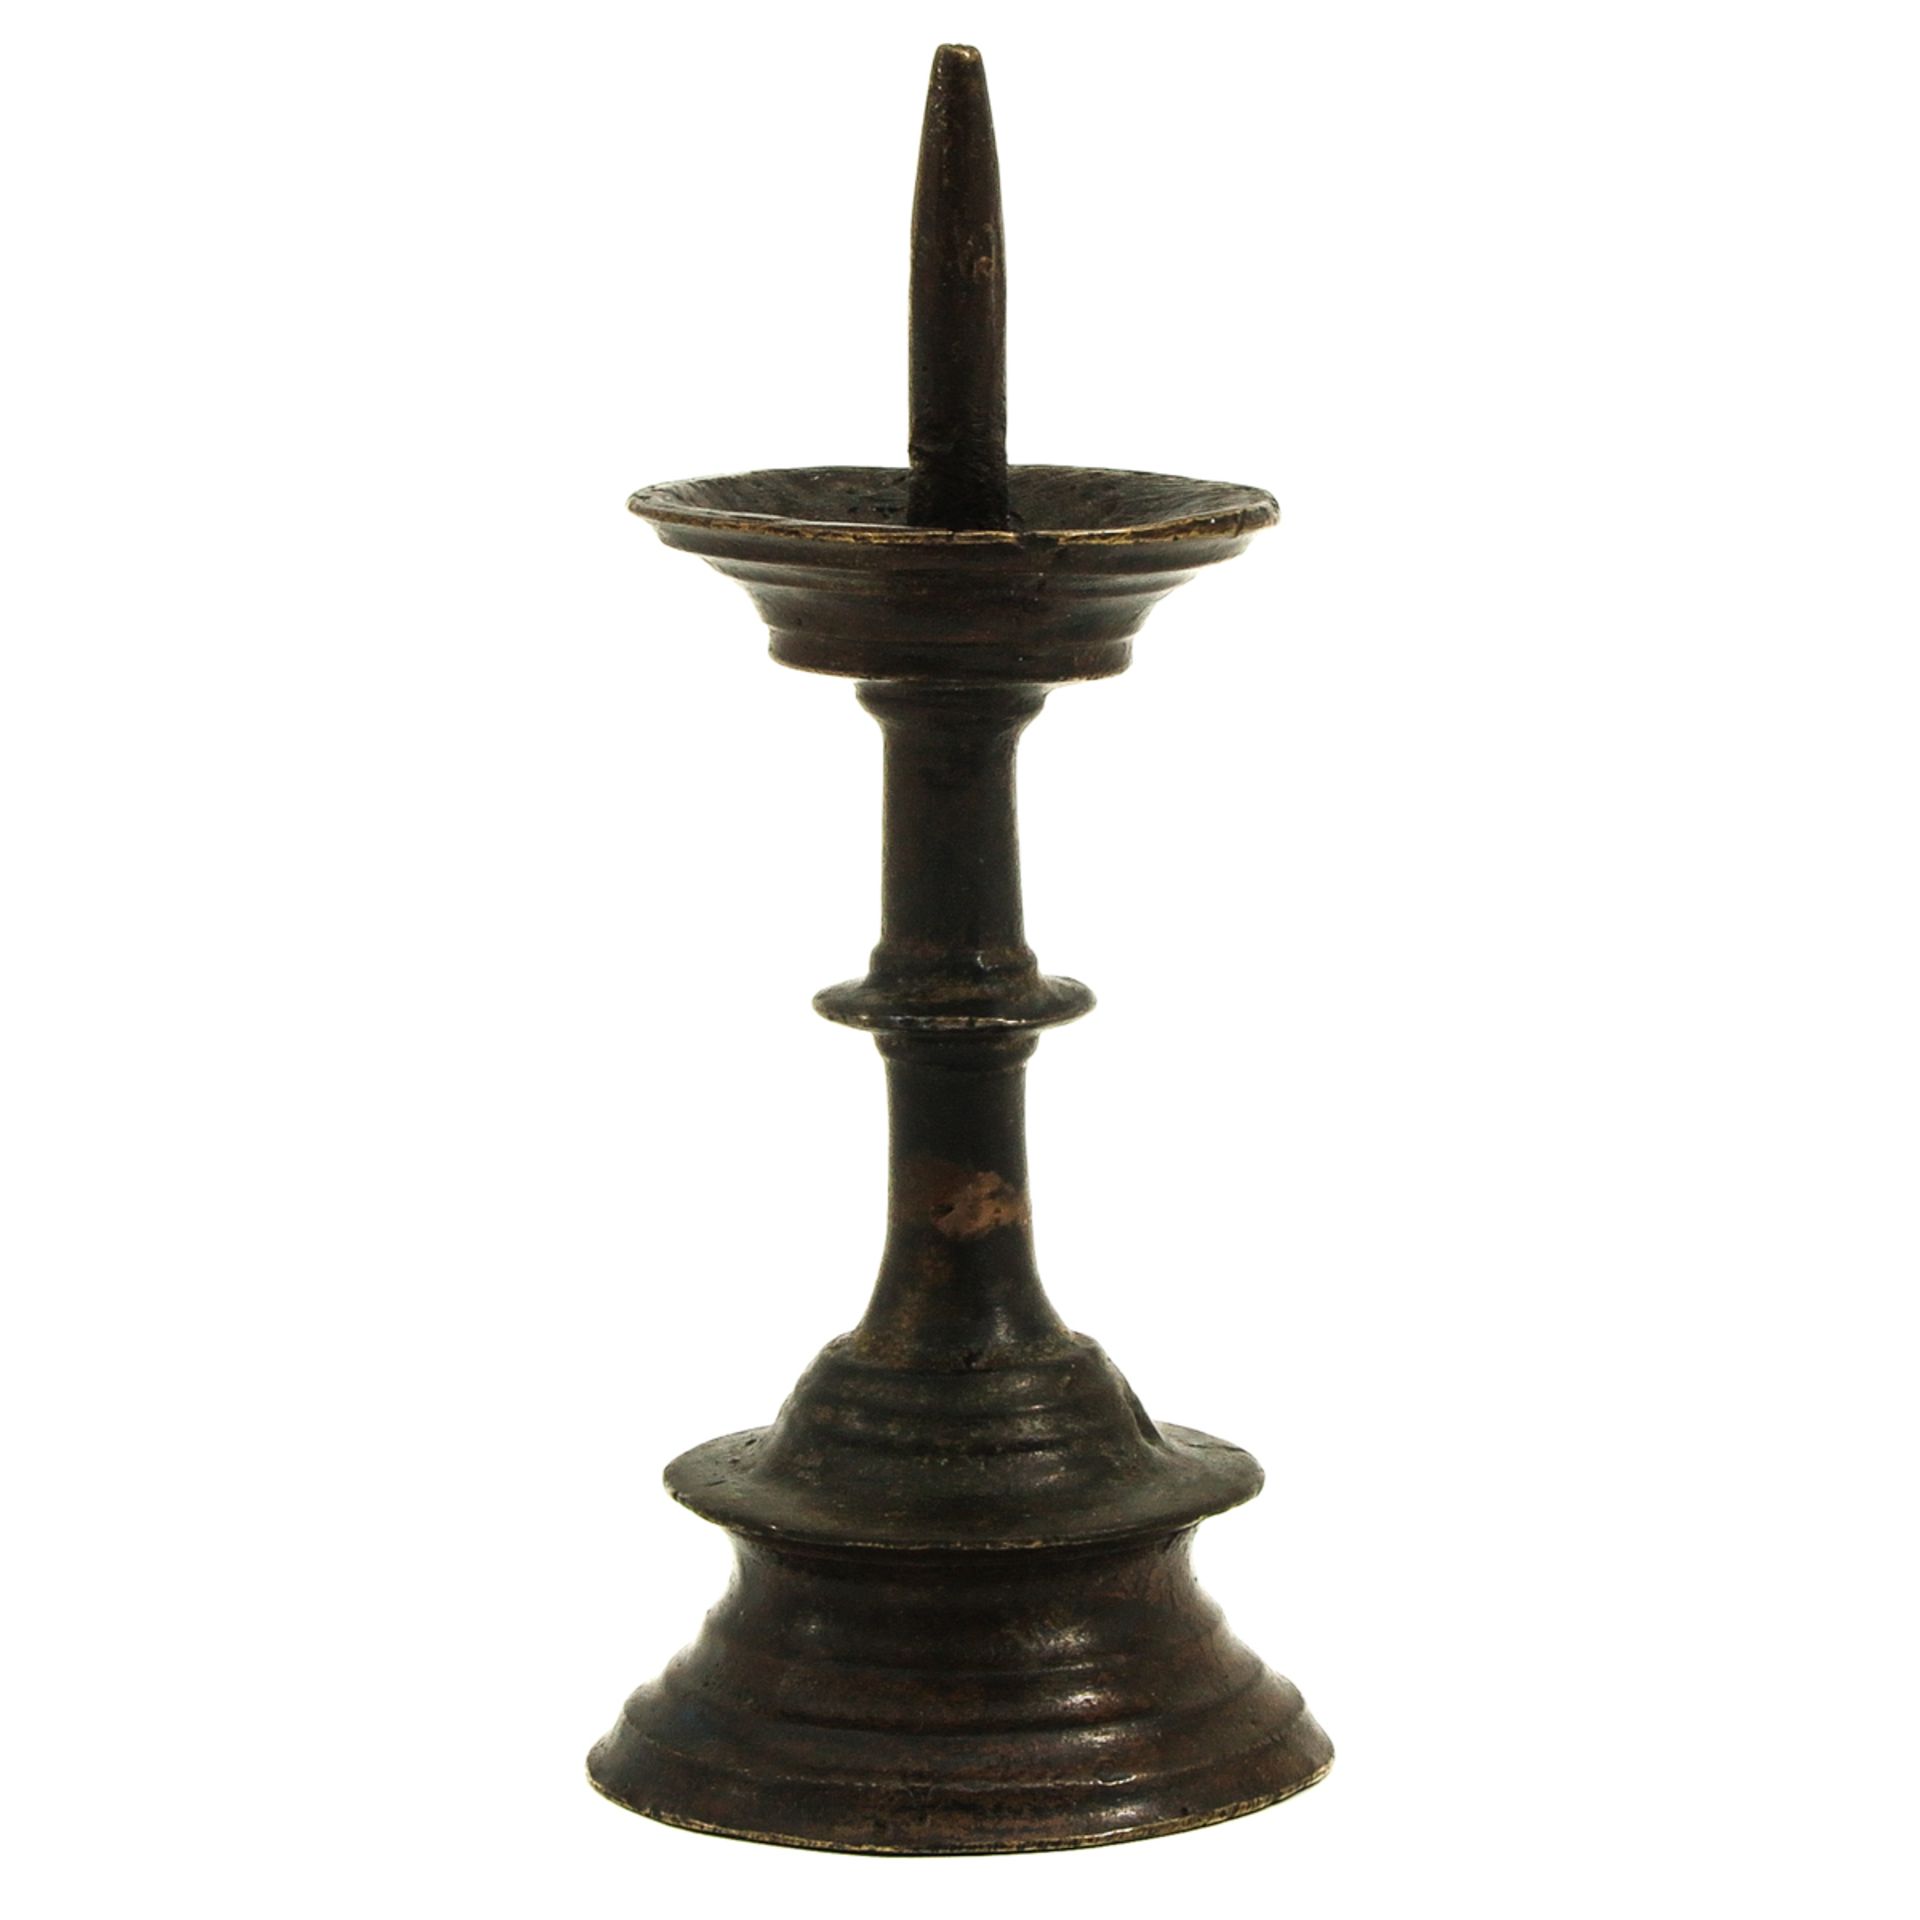 A 16th Century Miniature Candlestick